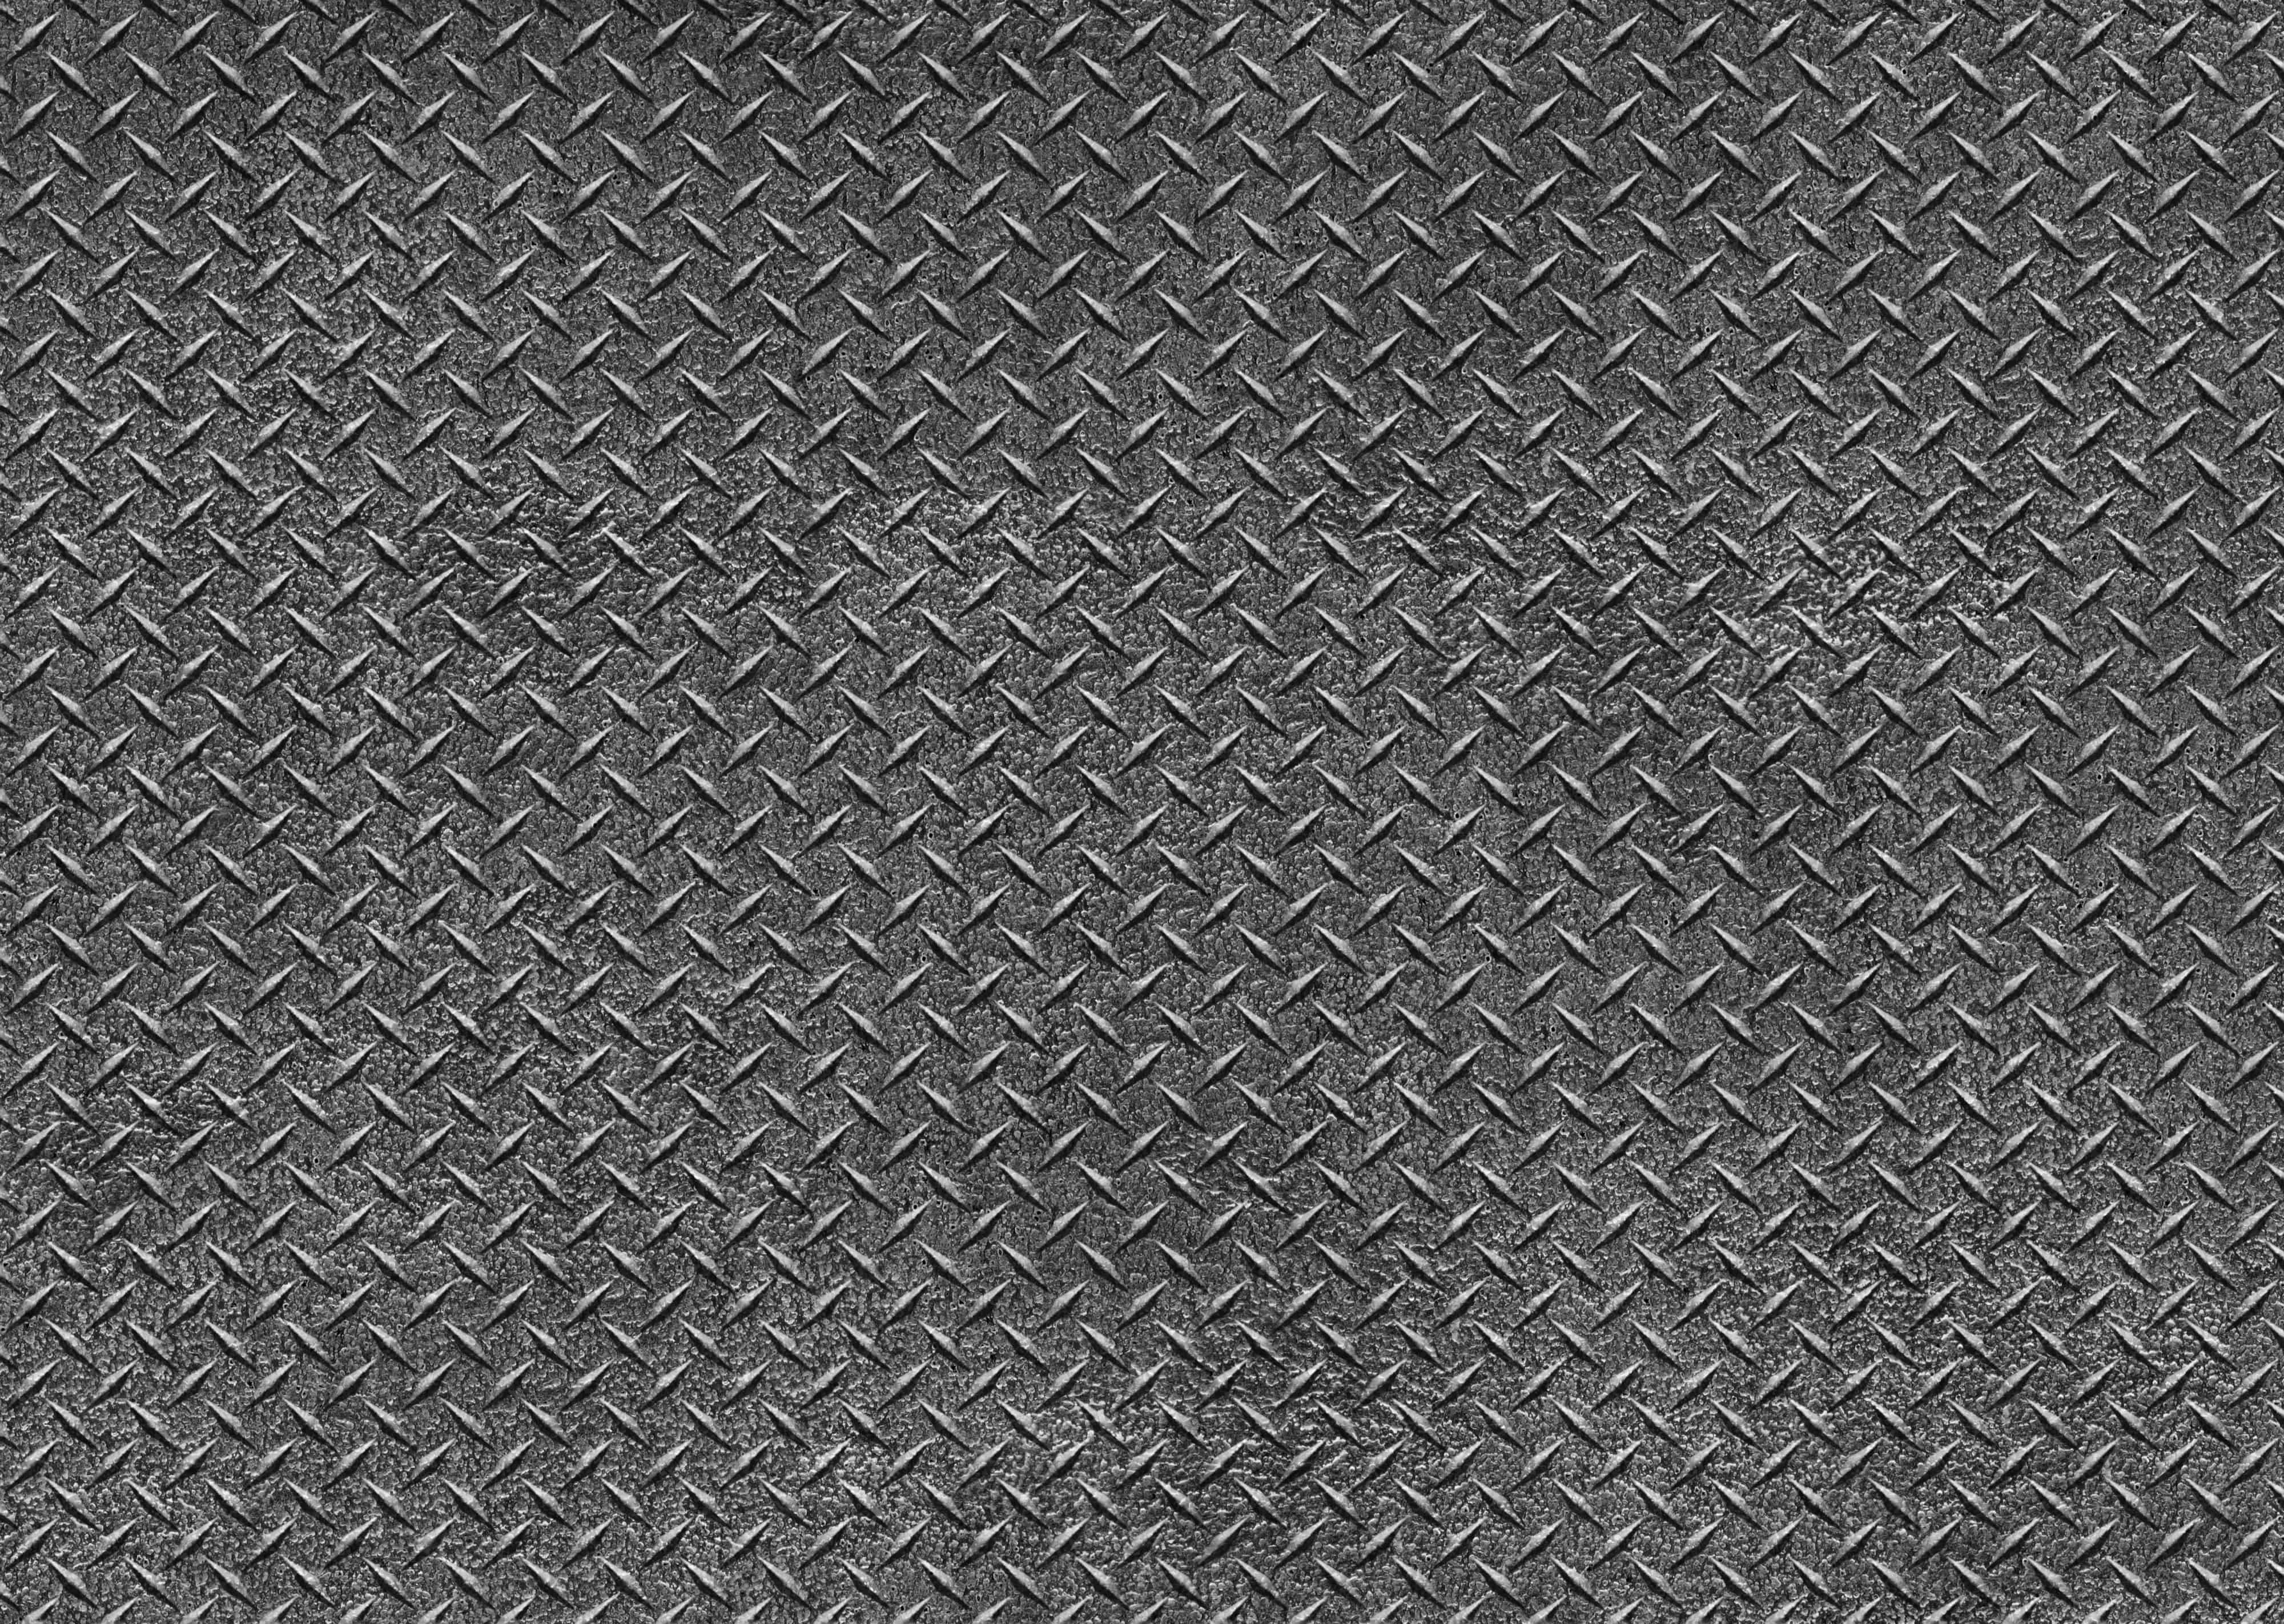 Tabla striata - Tabla neagra striata 5 x 1500 x 3000 mm, https:maxbau.ro